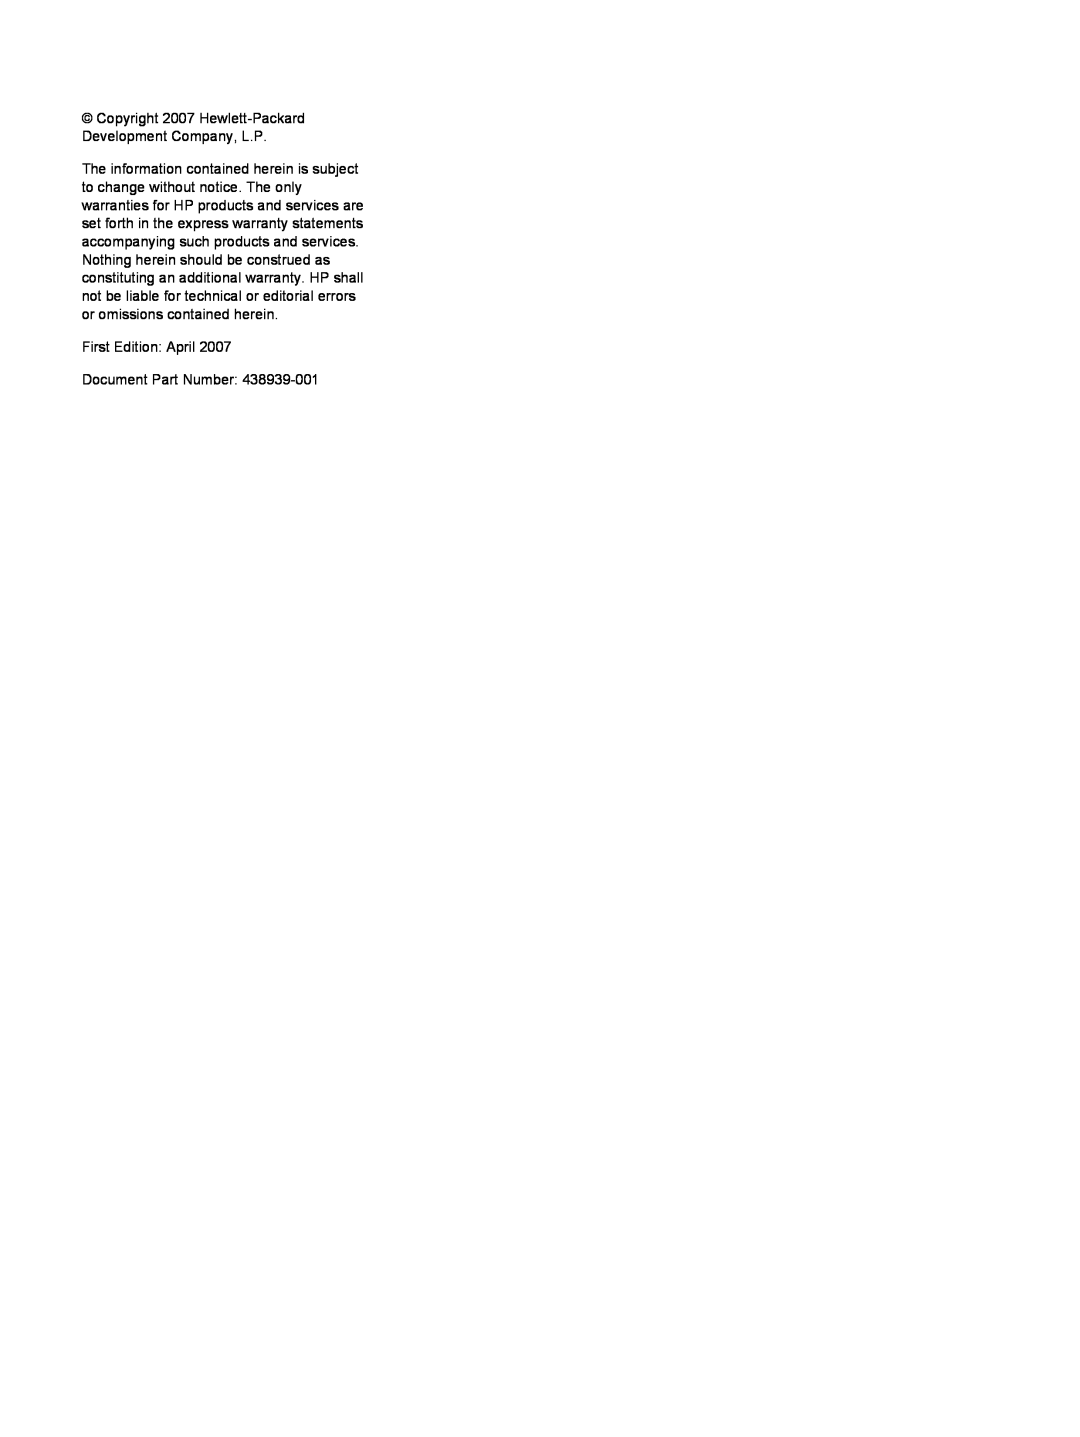 HP V6618AU, V6703AU manual Copyright 2007 Hewlett-Packard Development Company, L.P, First Edition April Document Part Number 